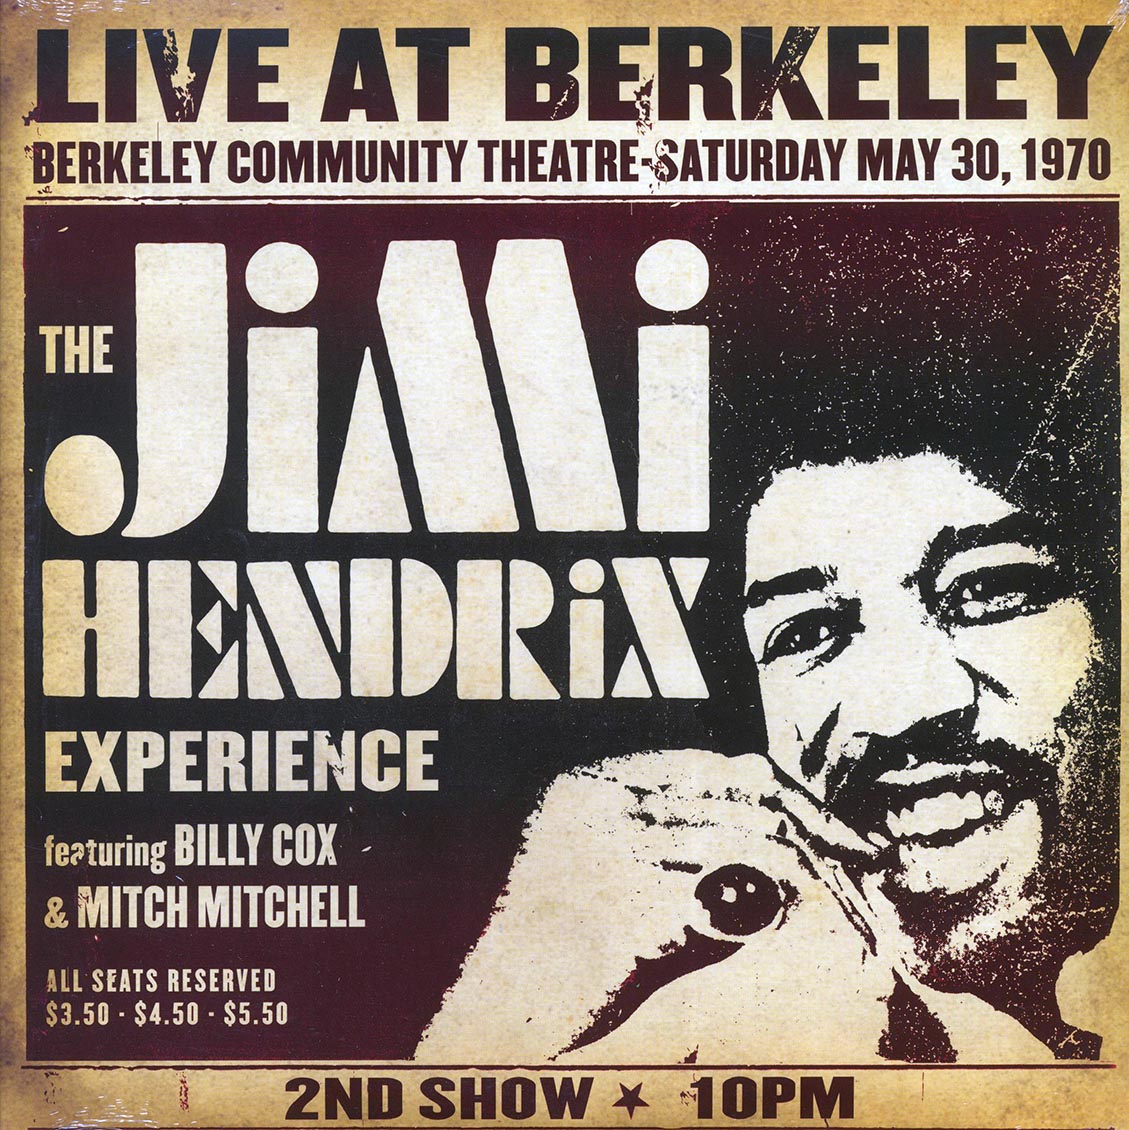 The Jimi Hendrix Experience - Live At Berkeley: Berkeley Community Theatre Saturday May 30, 1970 (2xLP) (180g) (remastered) - Vinyl LP